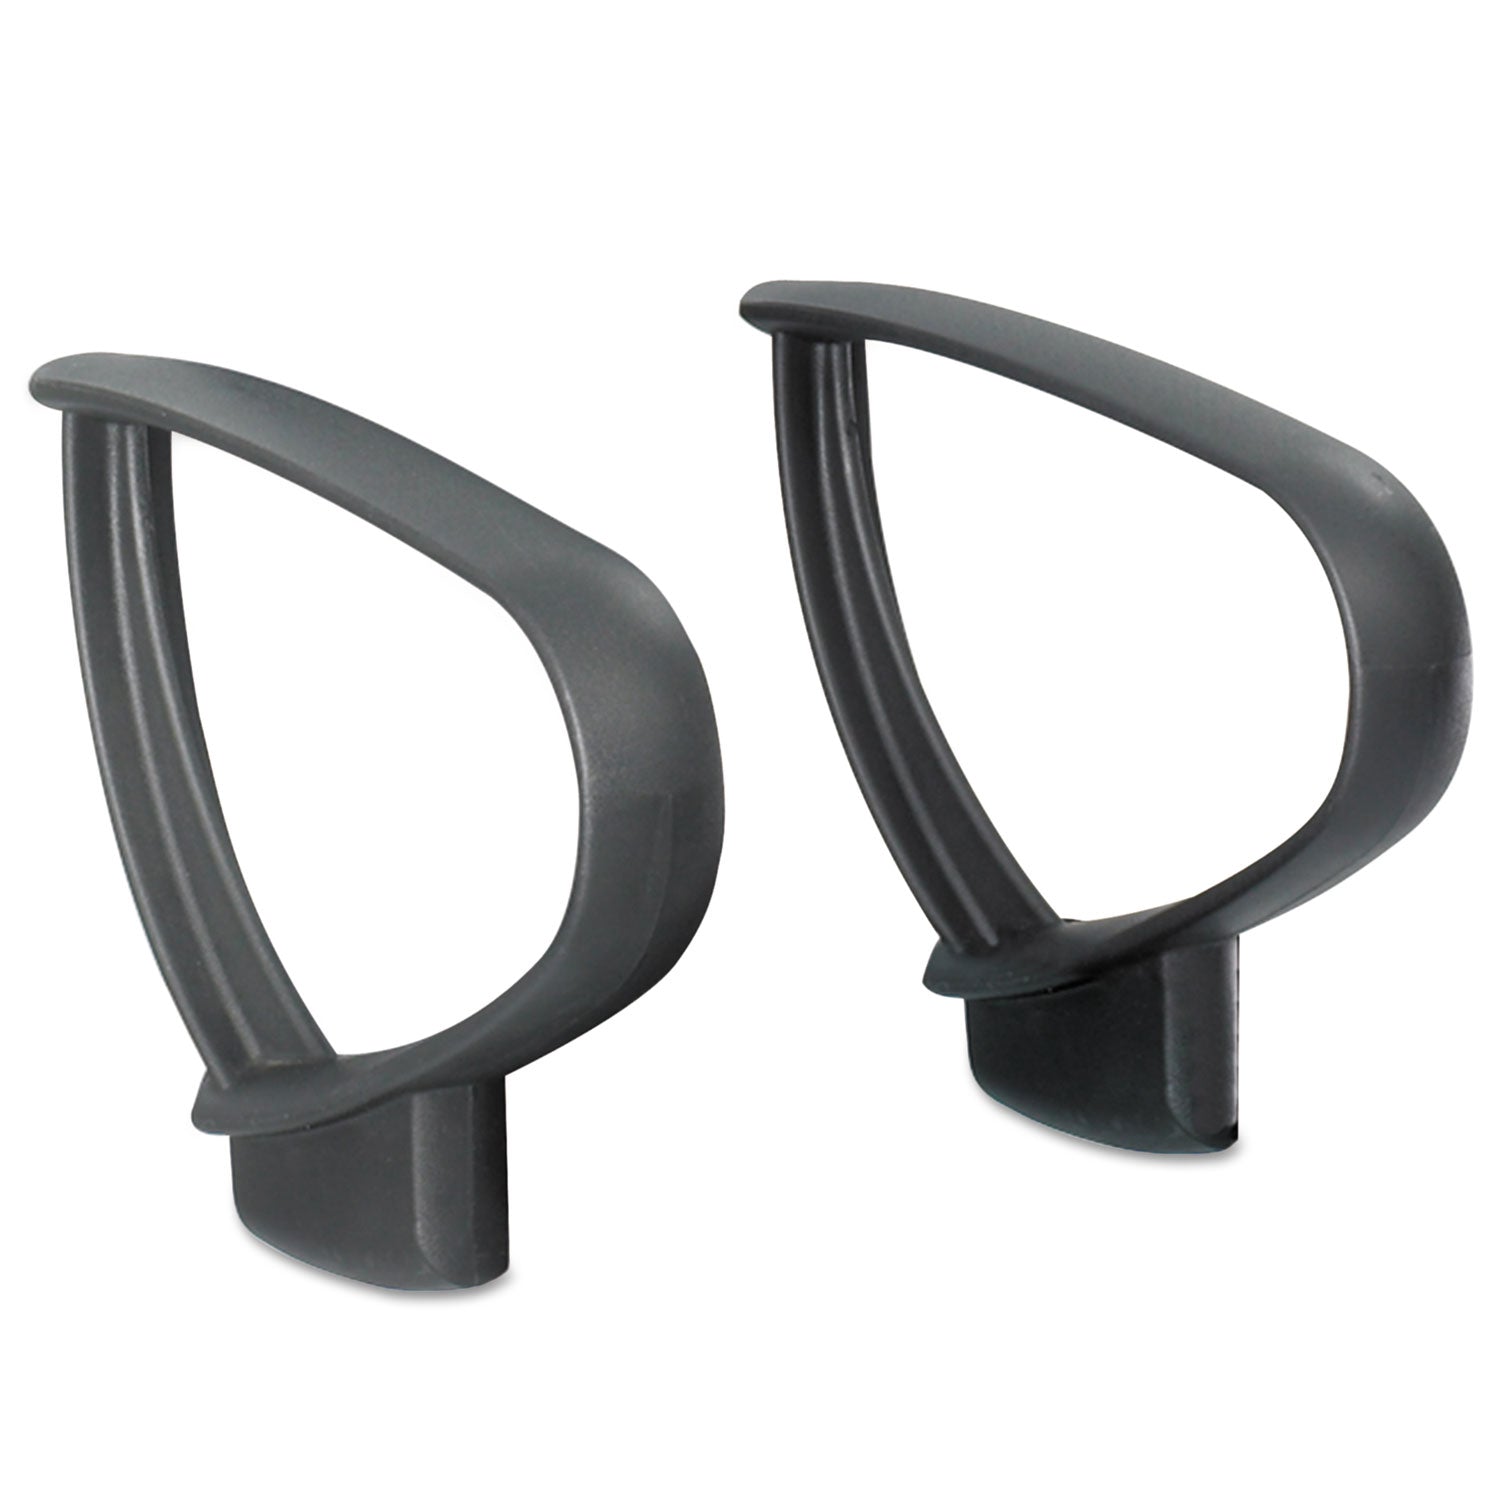 Optional Loop Arm Kit for Mesh Extended Height Chairs for Safco Vue Mesh Extended-Height Chairs, Black, 2/Set - 